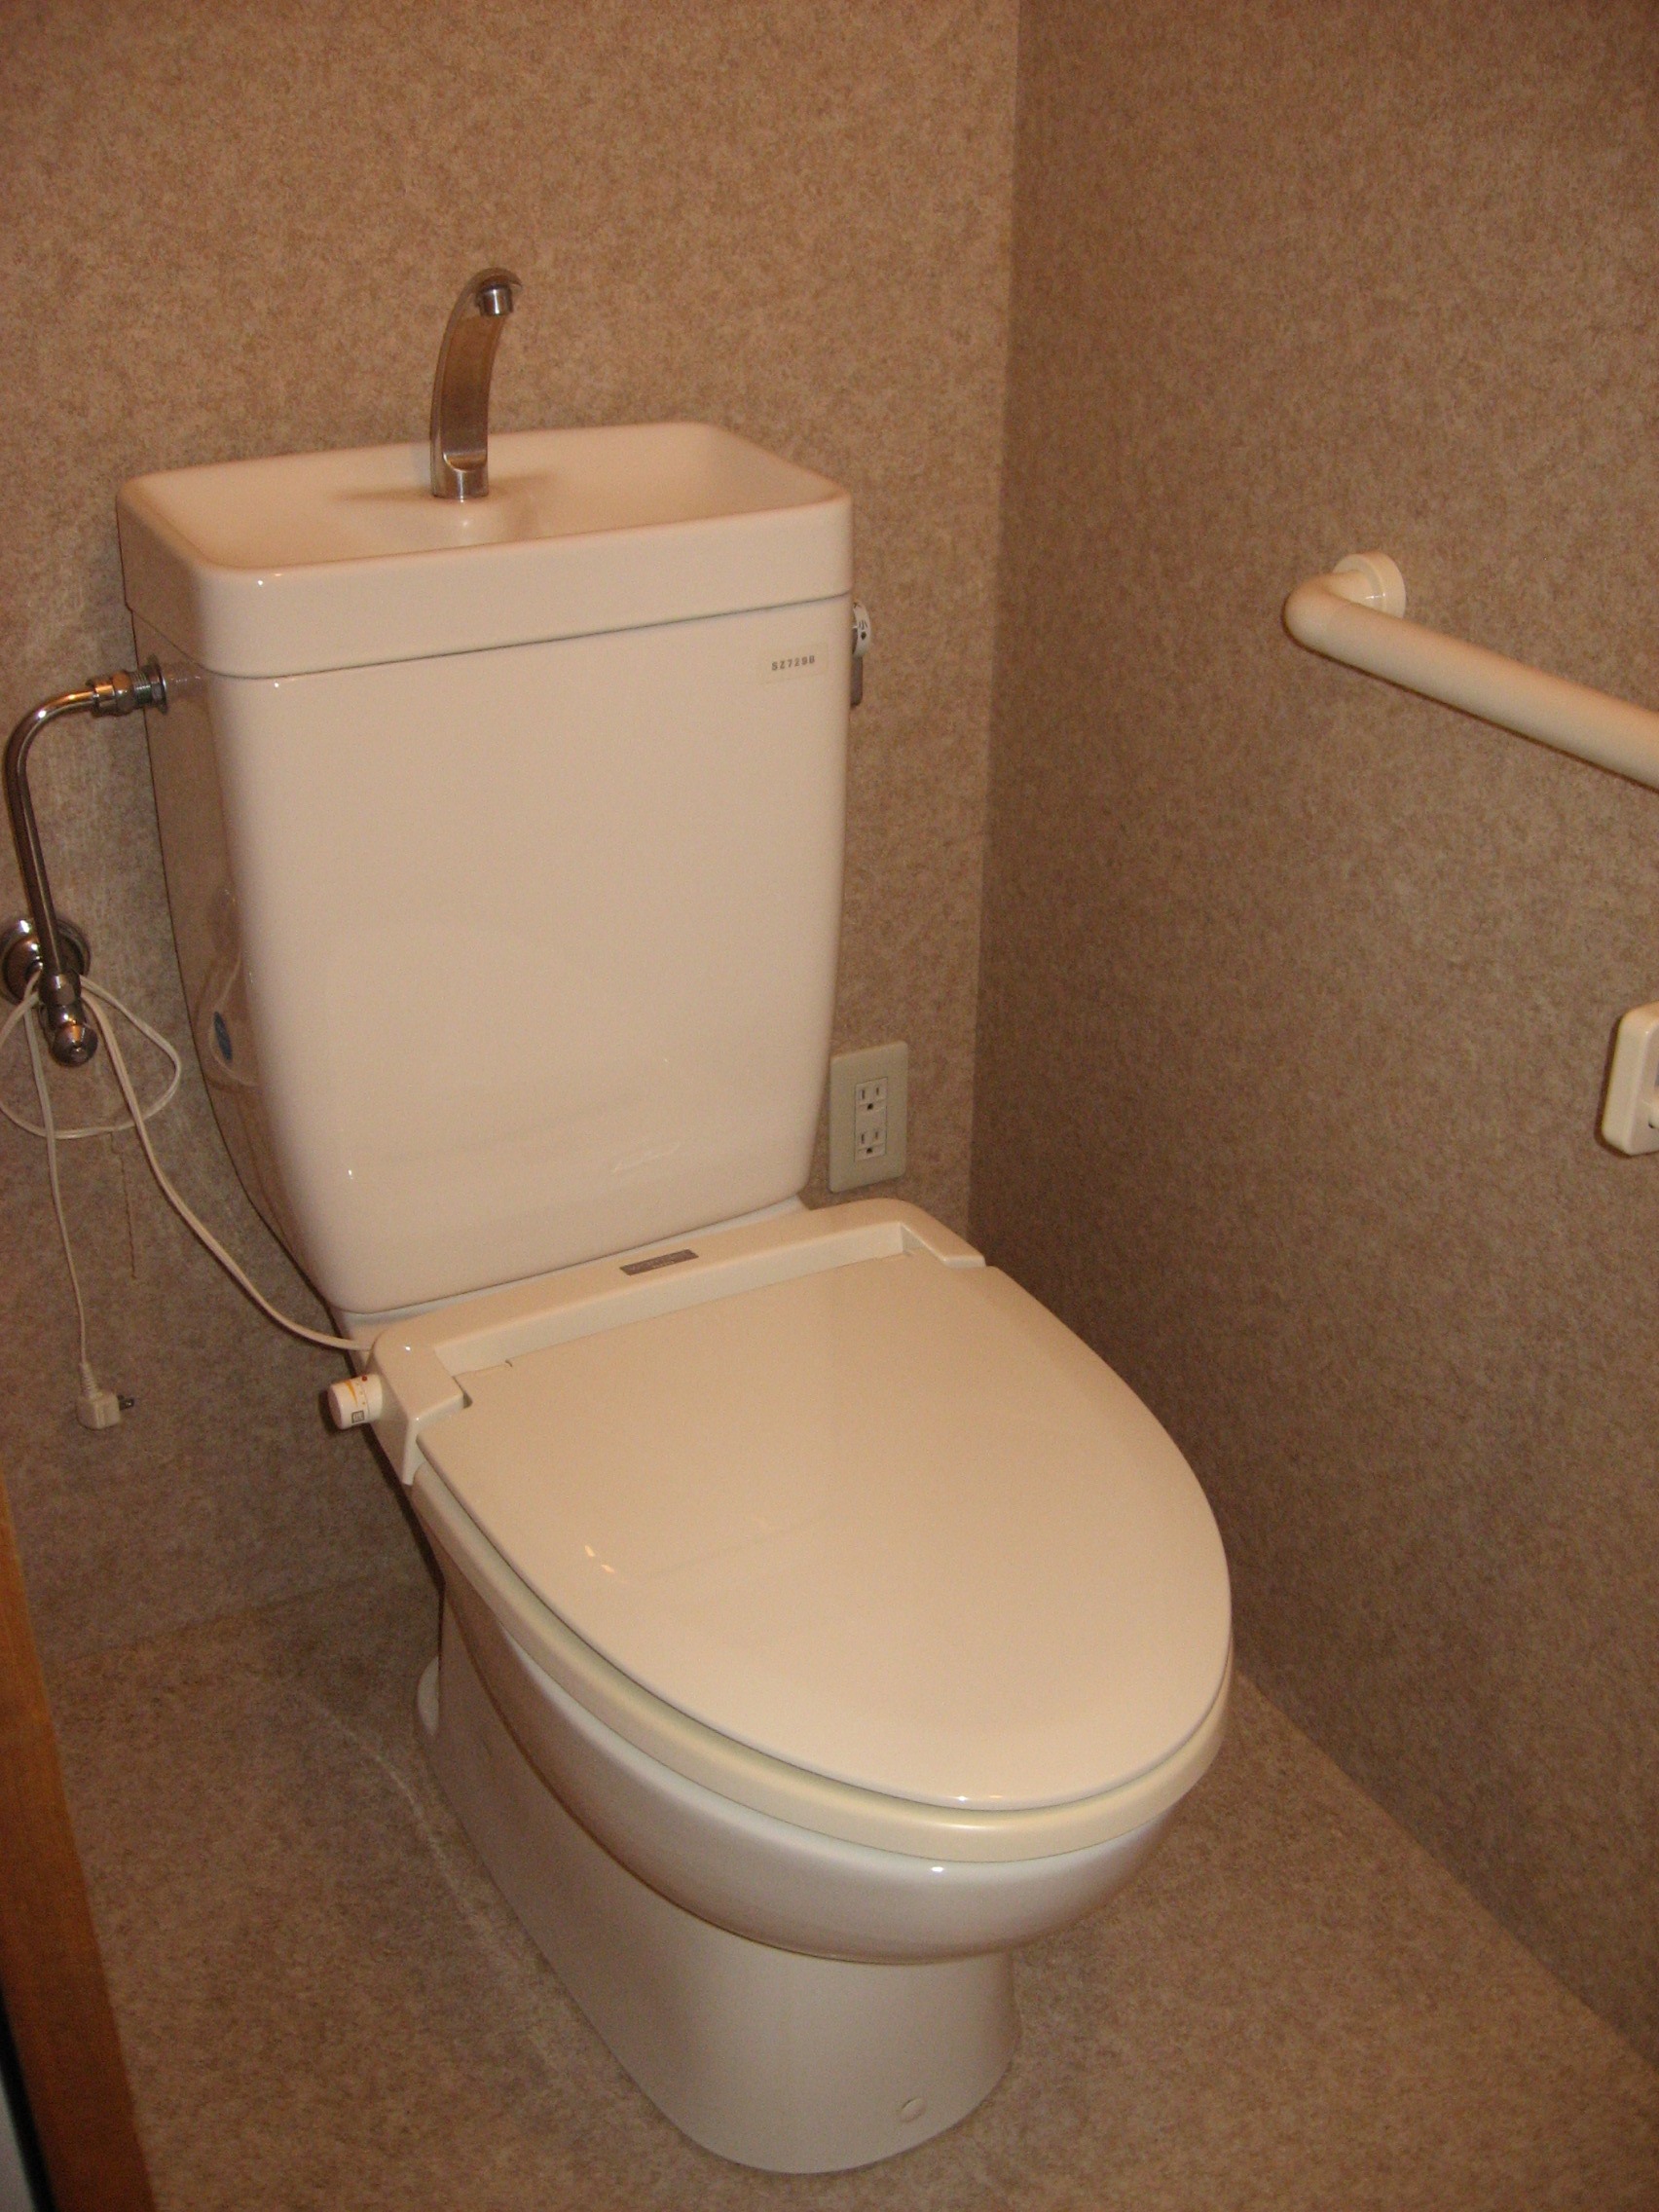 Toilet. Western-style toilet seat (with heating toilet seat)